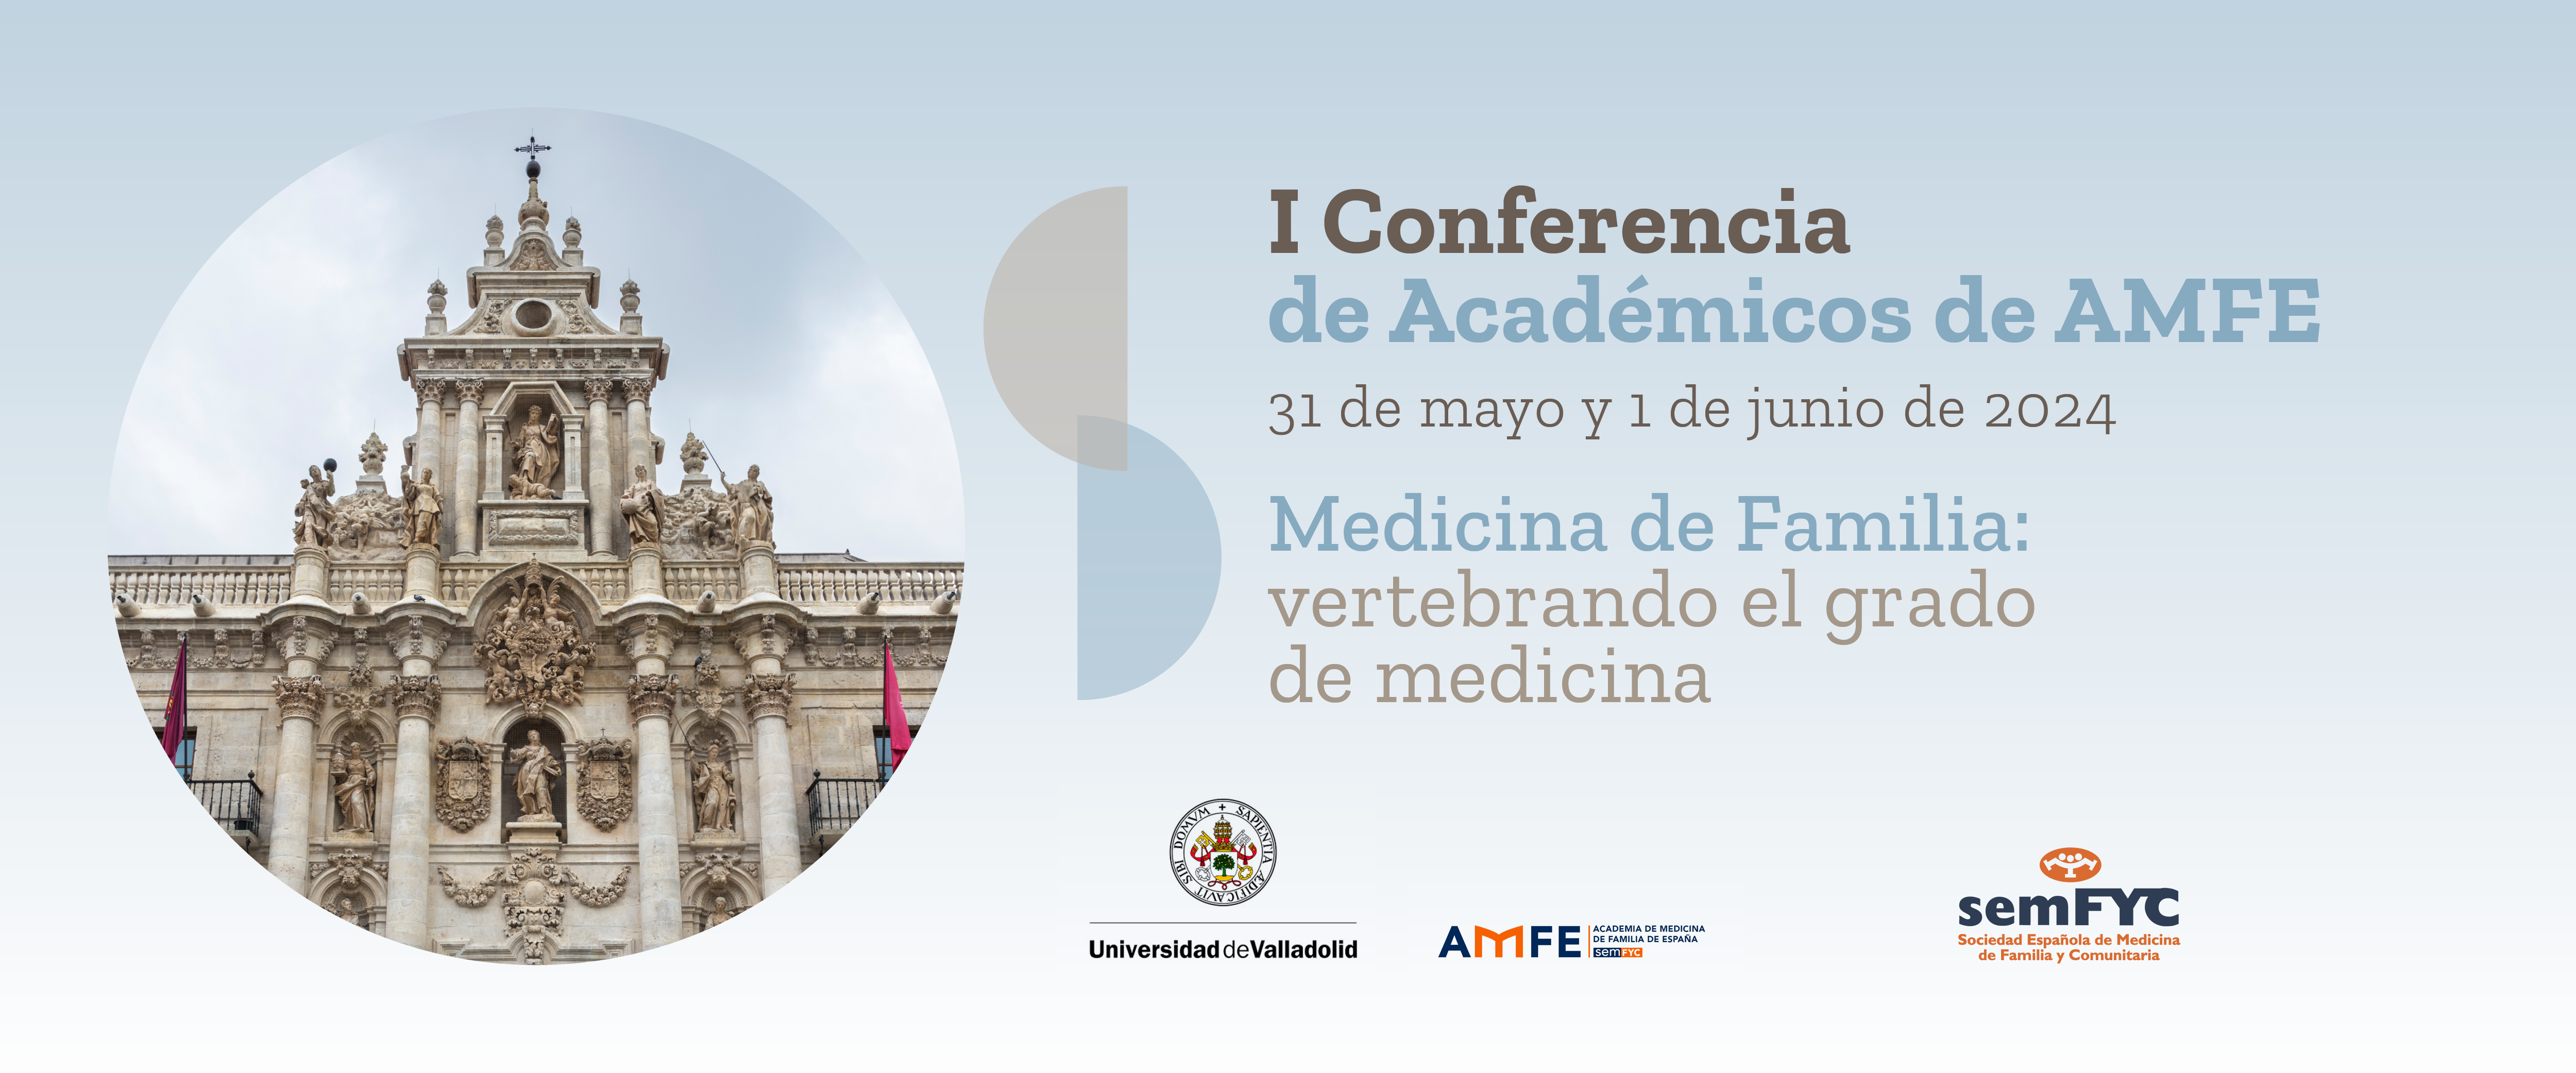 I Conferencia de Académicos de AMFE